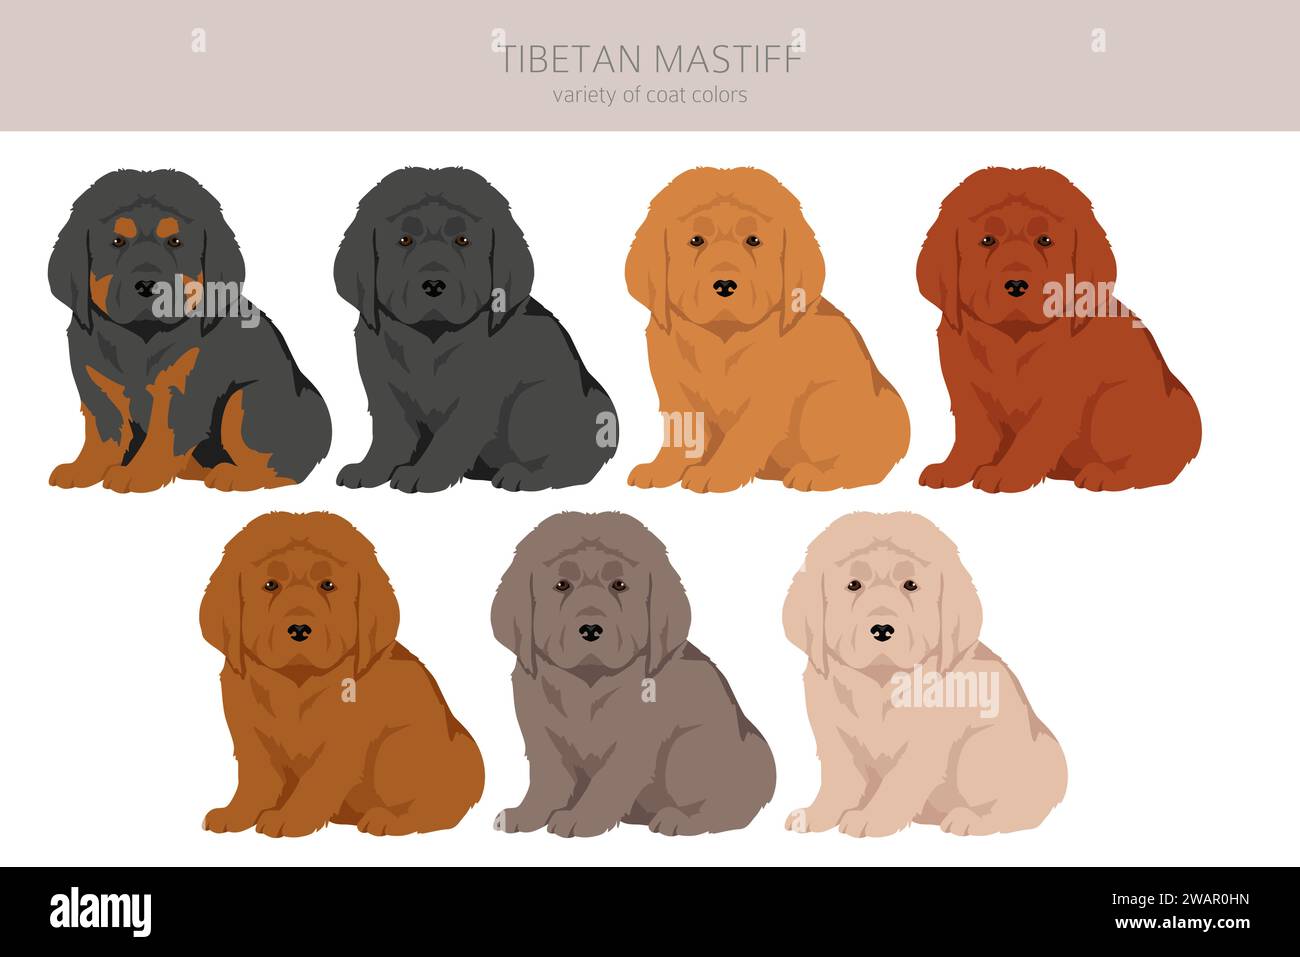 Tibetan mastiff puppies clipart. Different poses, coat colors set.  Vector illustration Stock Vector